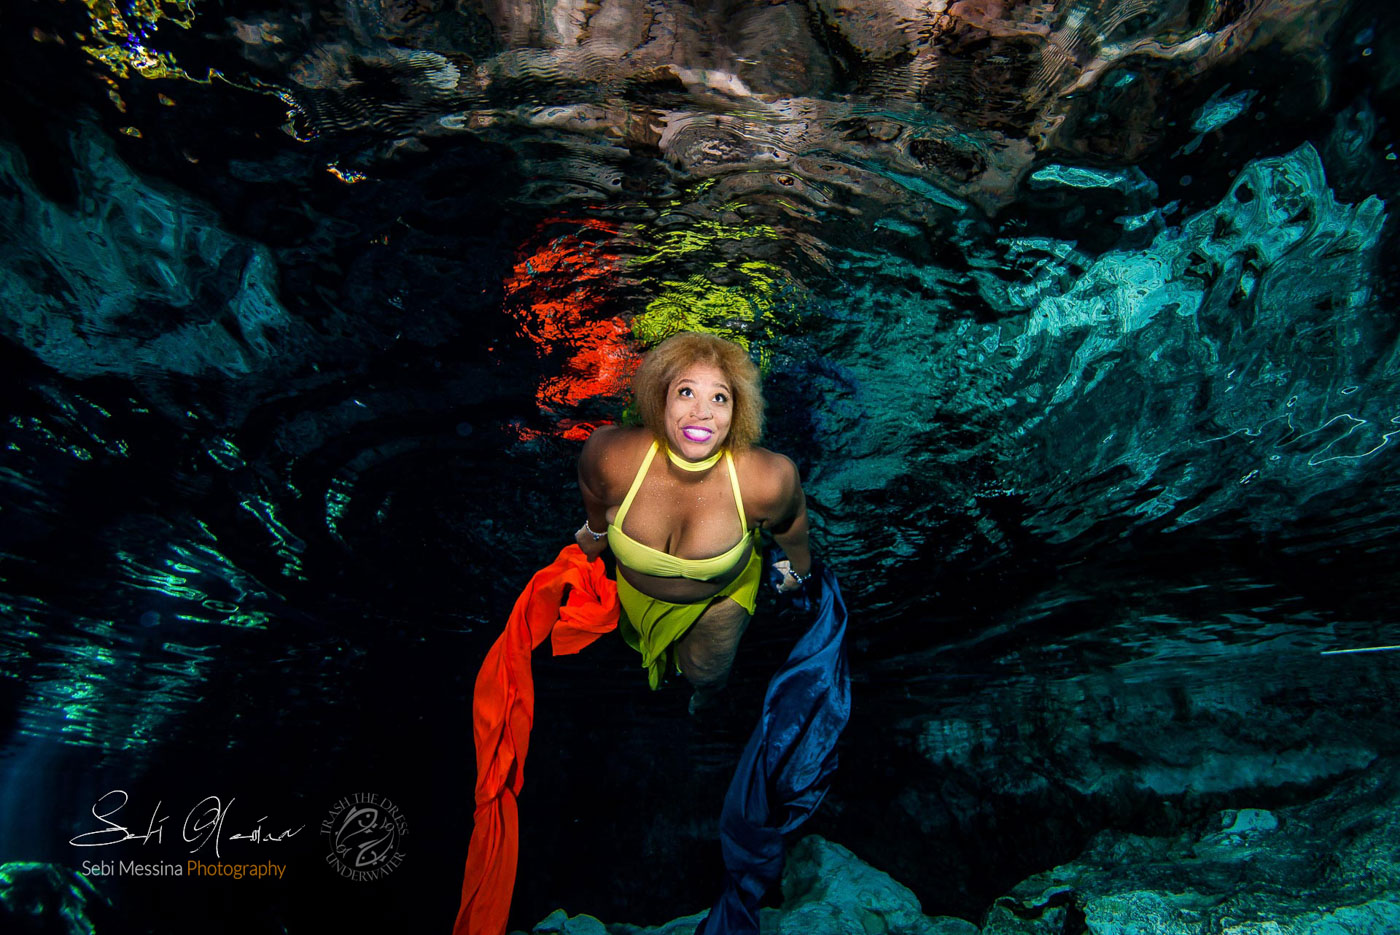 Black Model Underwater - Veronica - Sebi Messina Photography